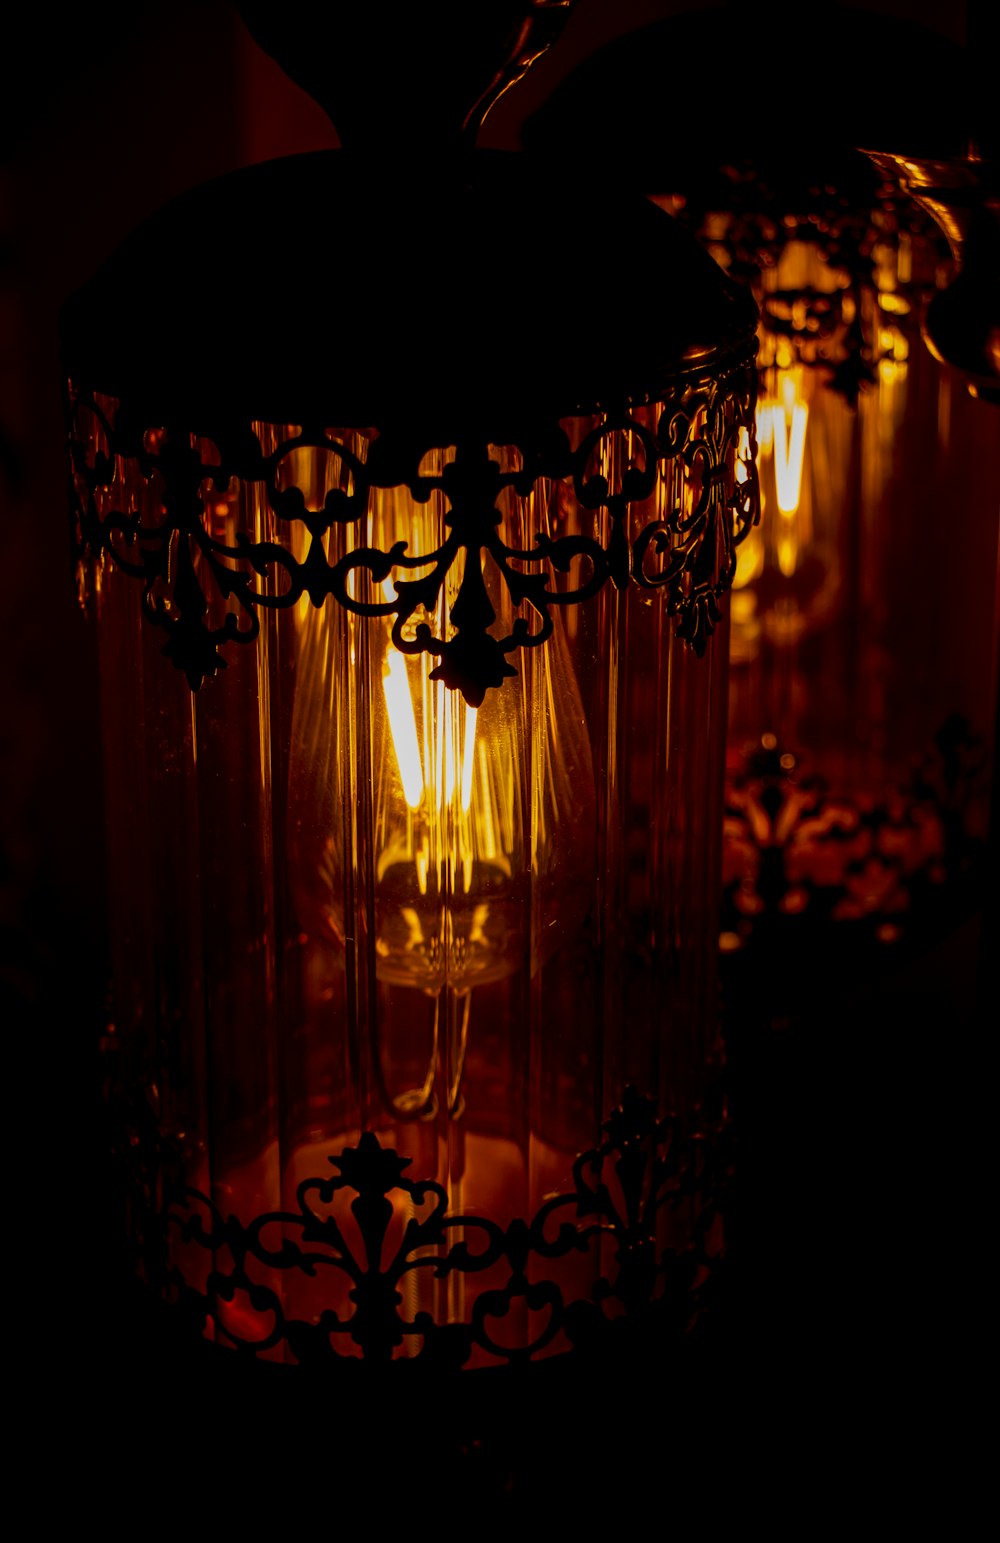 Portacandele in vetro trasparente con candele accese